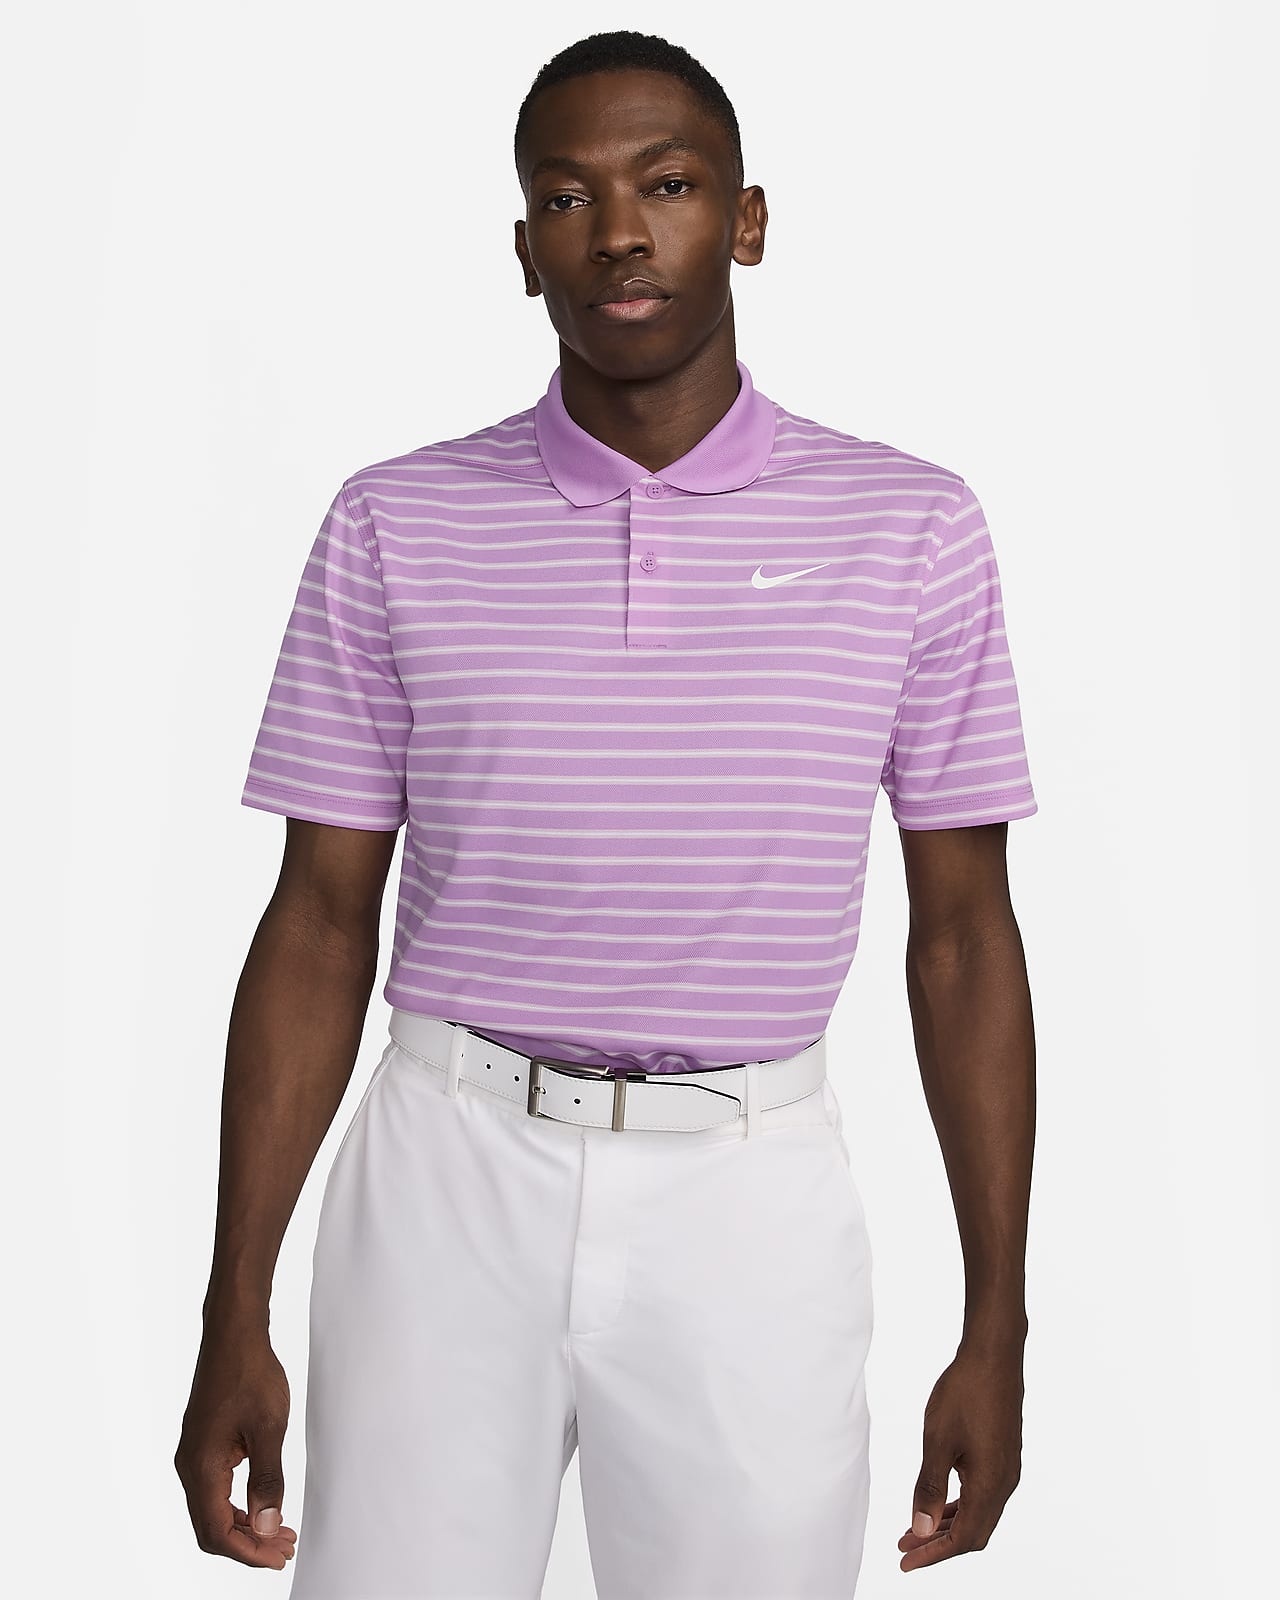 Nike Dri-FIT Victory Men's Striped Golf Polo.